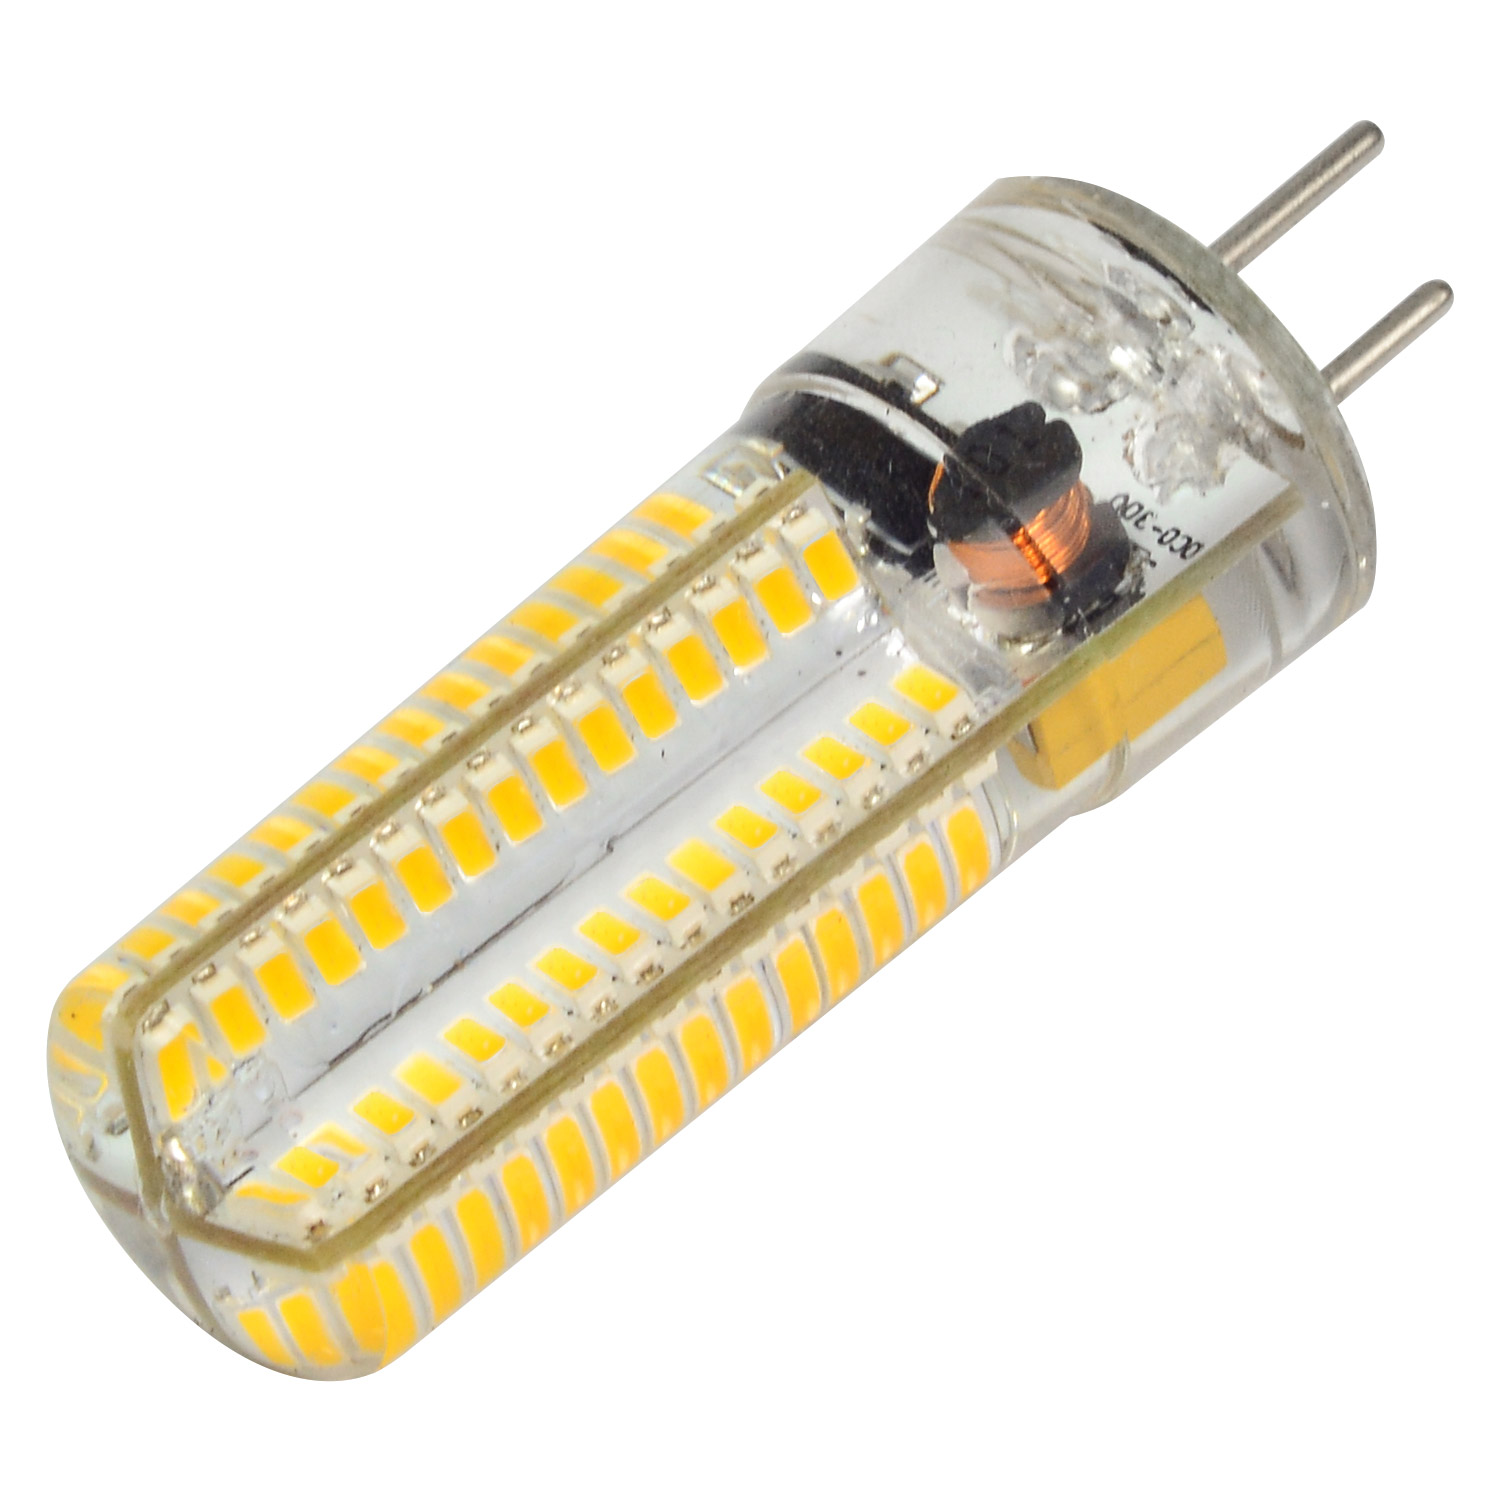 MengsLED – MENGS® GY6.35 6W LED Light 120x 3014 SMD Bulb Lamp AC/DC 12V In Warm/Cool White Energy-Saving Light